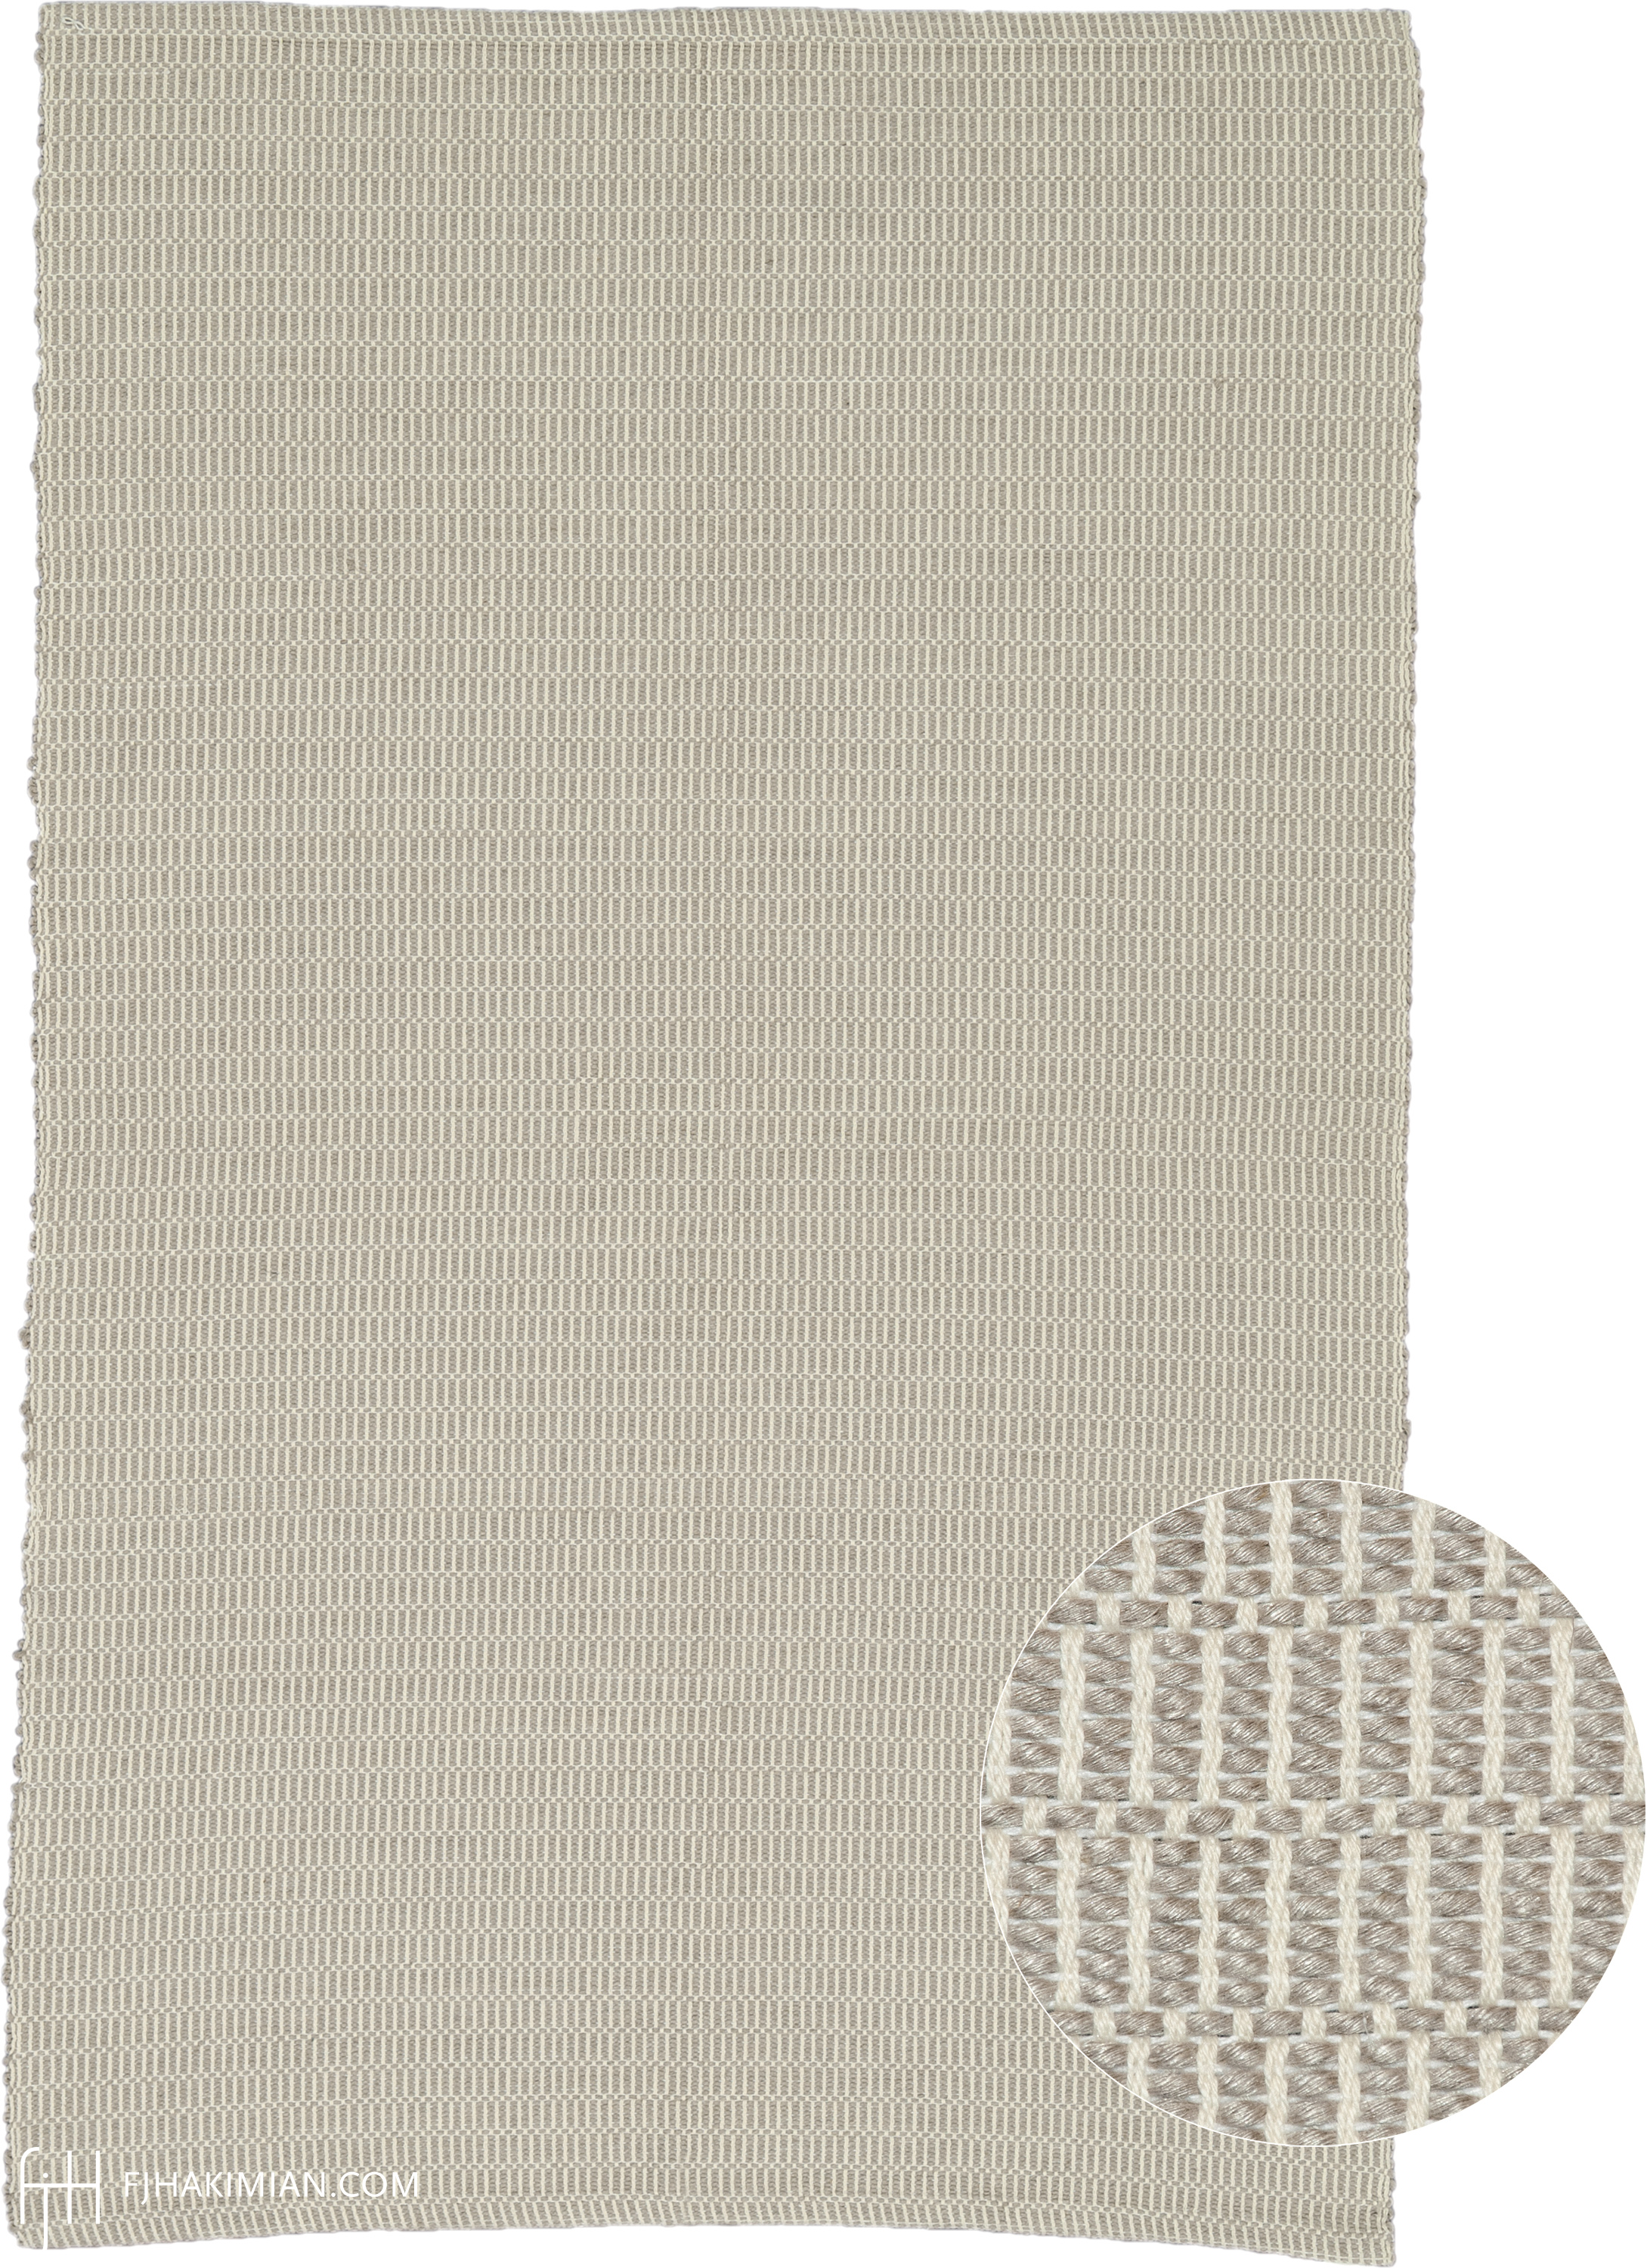 25224 | IF-110 Design | Linen Cotton Sardinian Carpet | Custom Sardinian Carpet | FJ Hakimian | Carpet Gallery in NYC